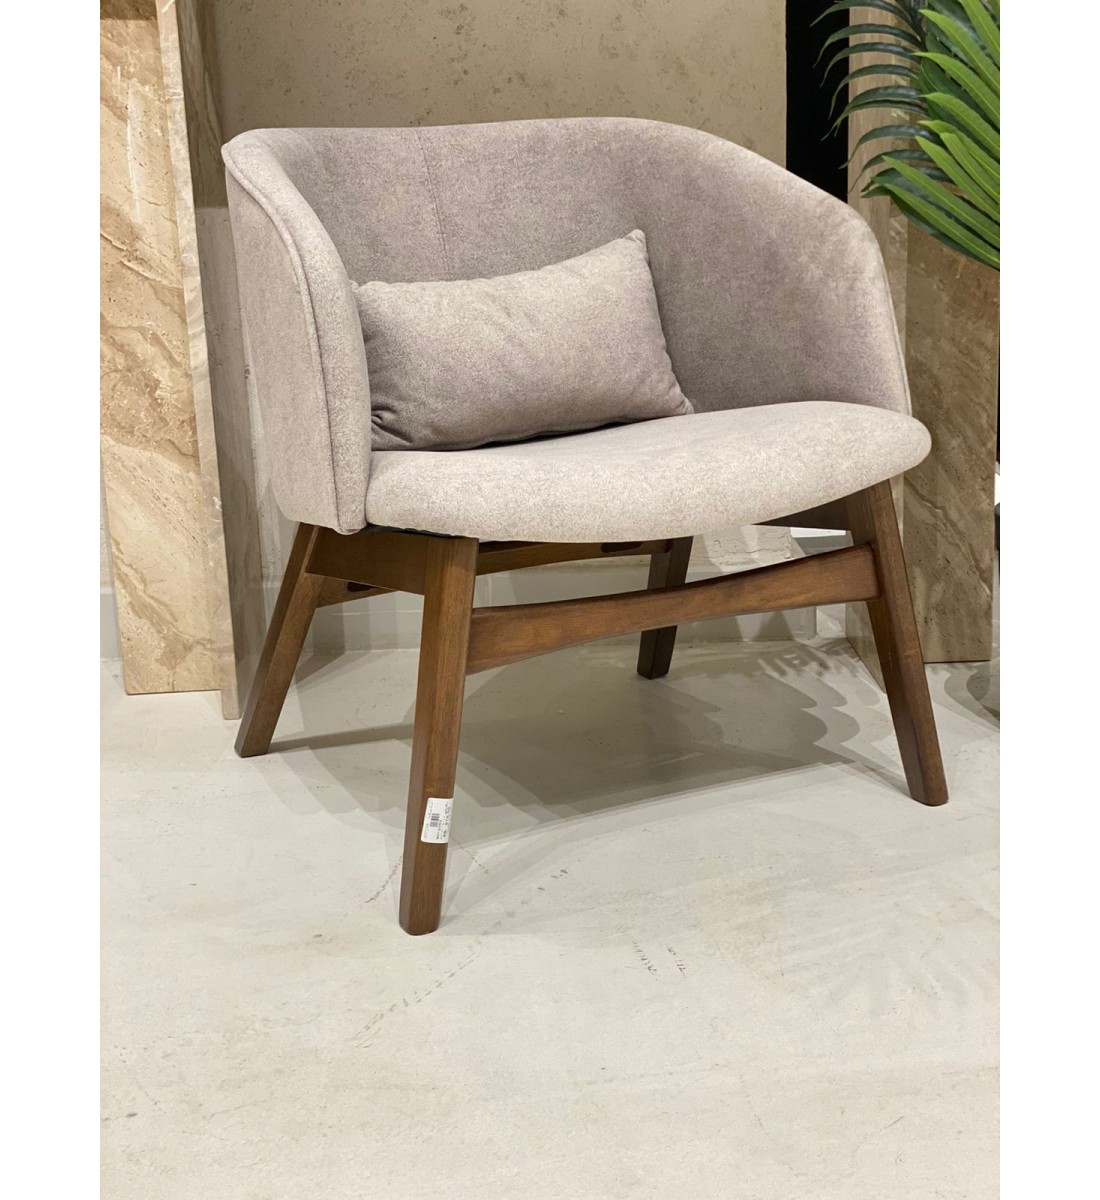 Malaysian wood sofa chair, fabric with wood legs, size 61 * 64 * 65 cm